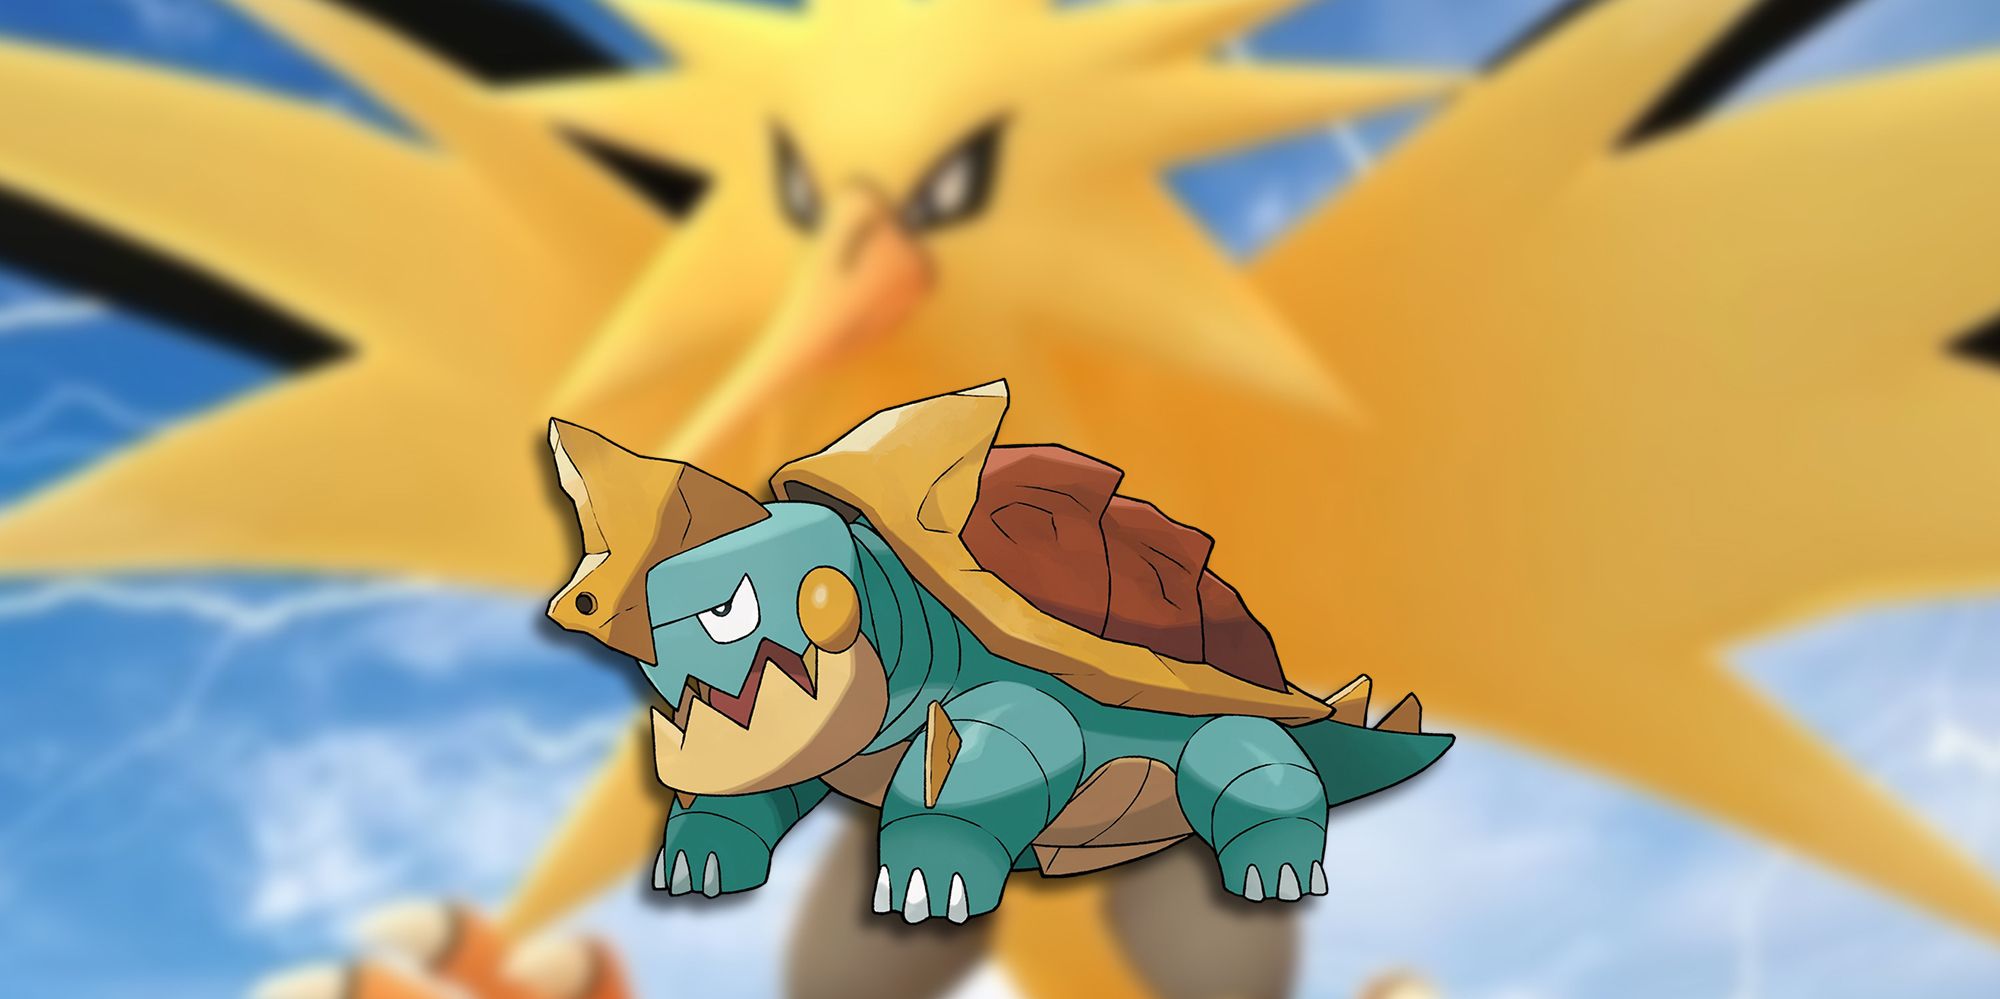 Pokemon Unite - PNG Of Drednaw Overlaid On Image Of Zapdos